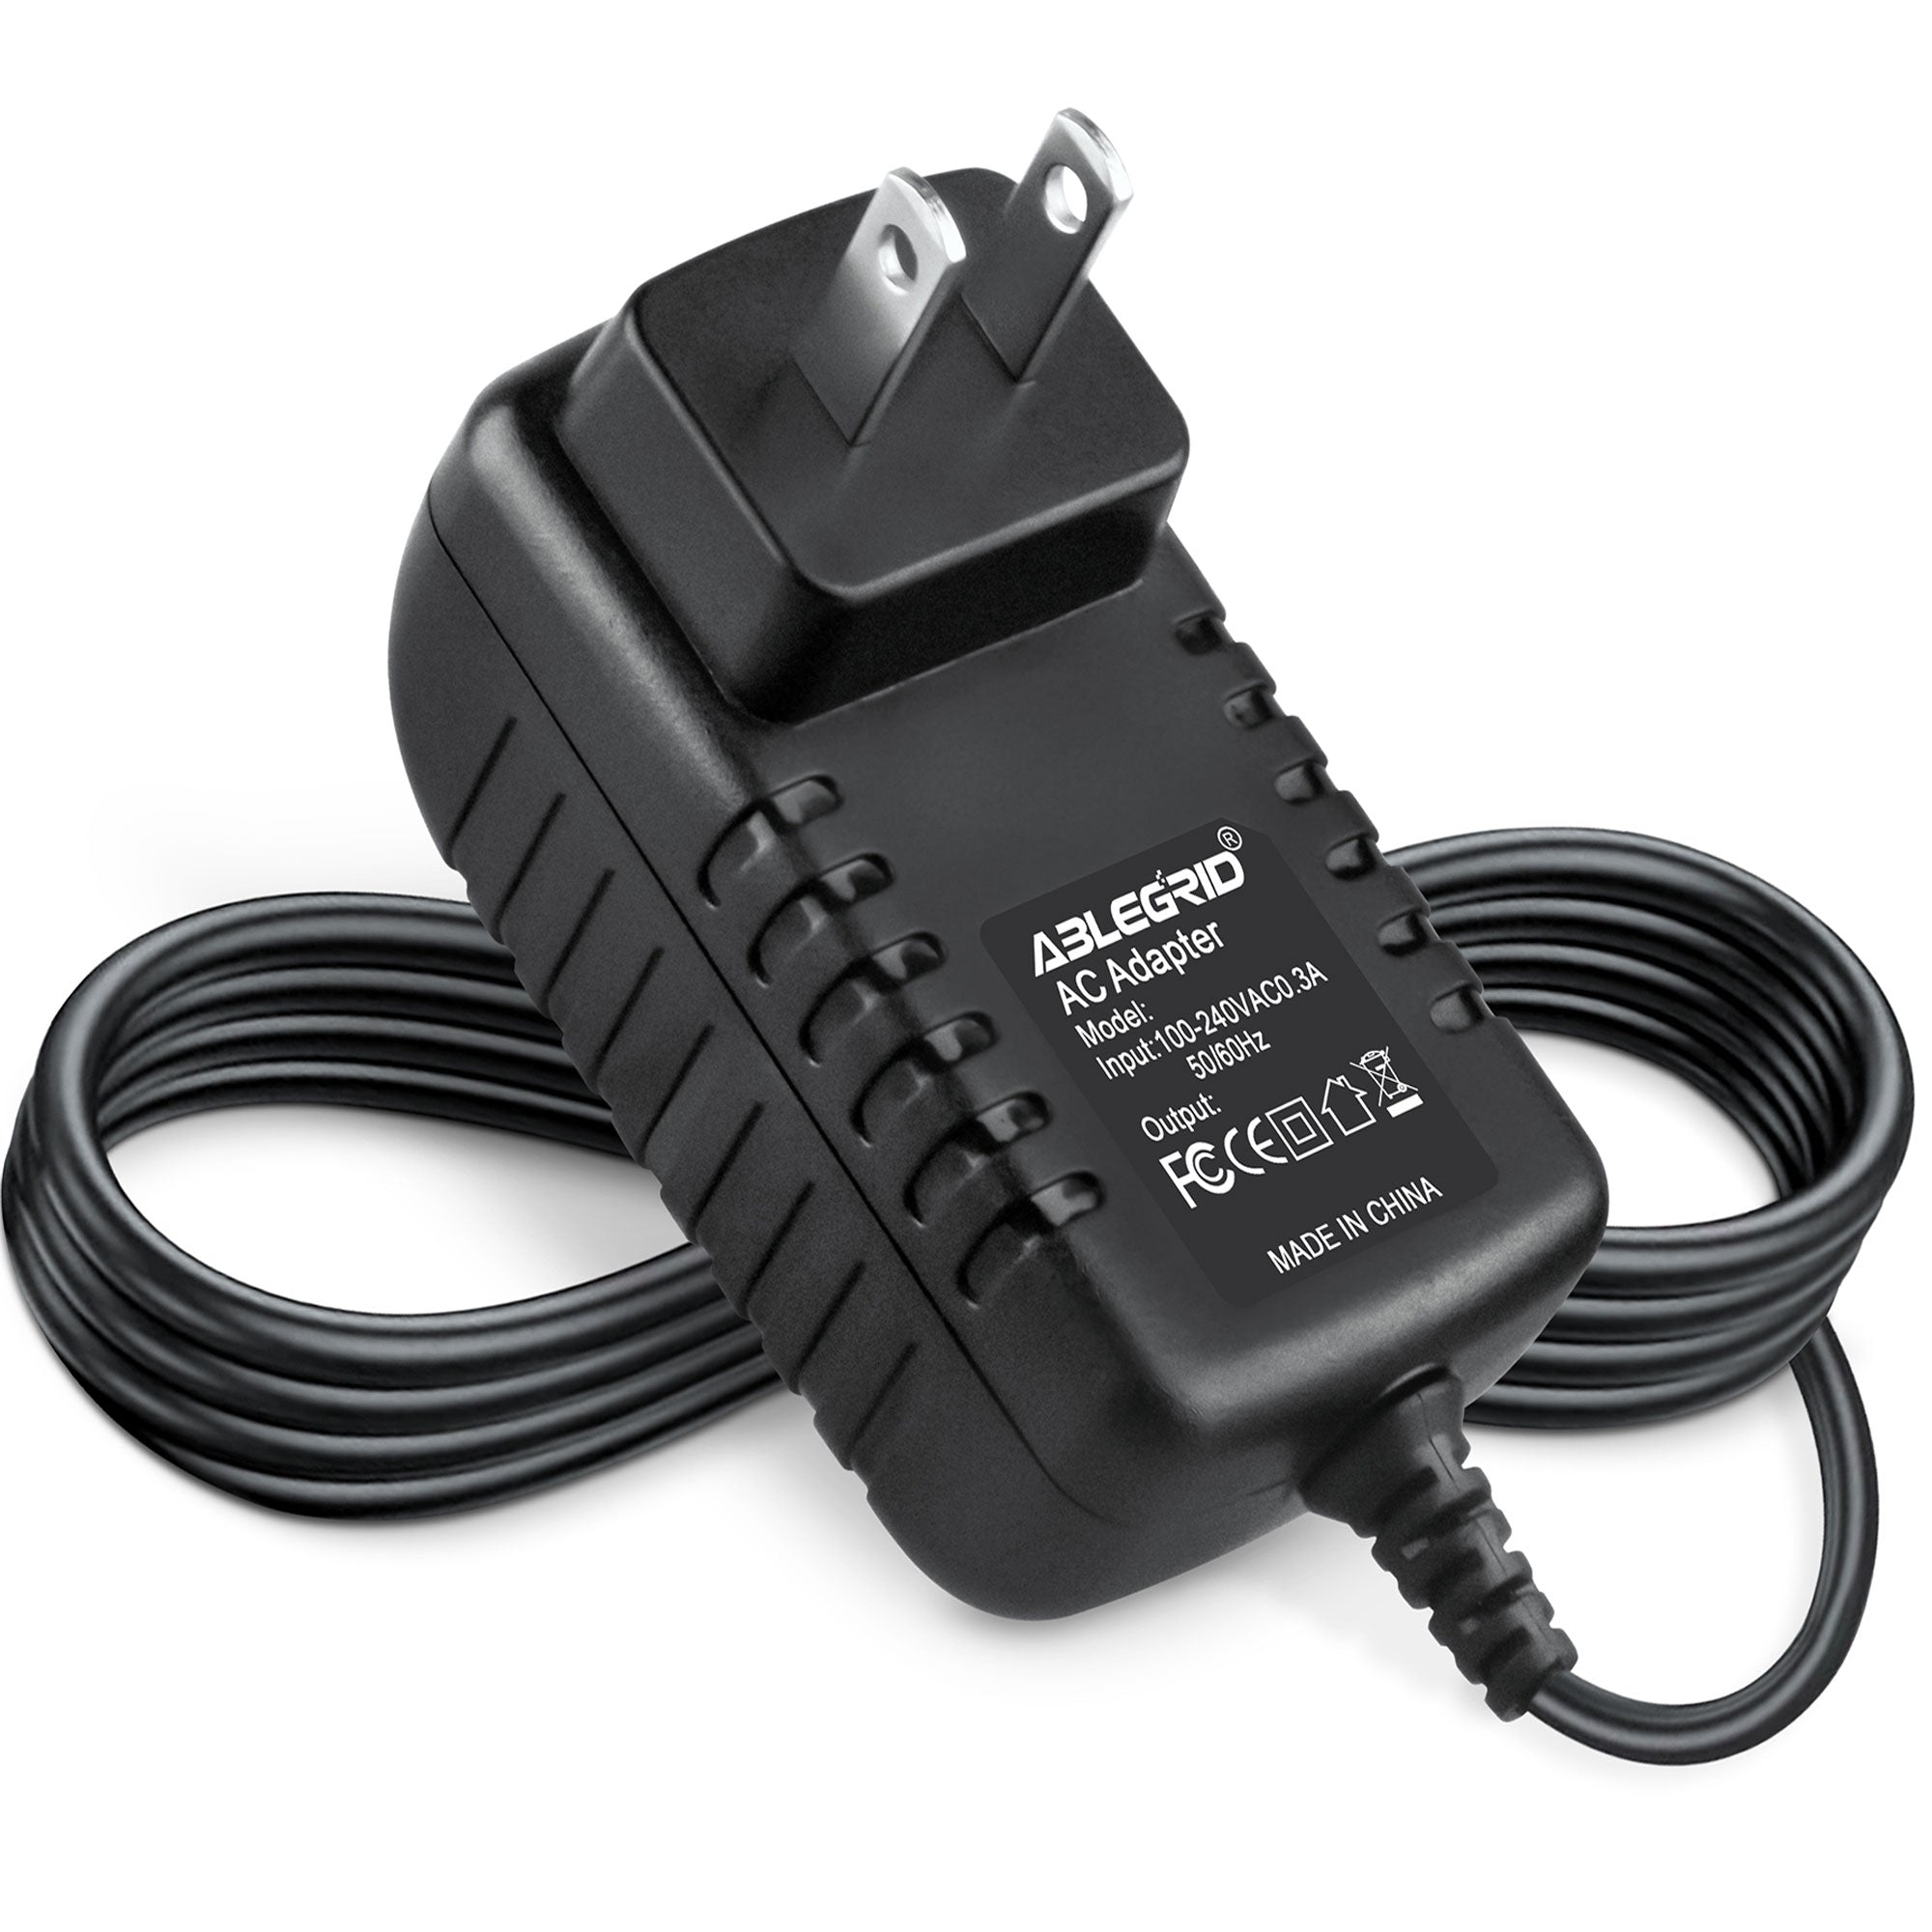 AbleGrid AC Adapter for SANYO SL-0106 Digital Camera Power Supply Cord Wall Home Charger PSU